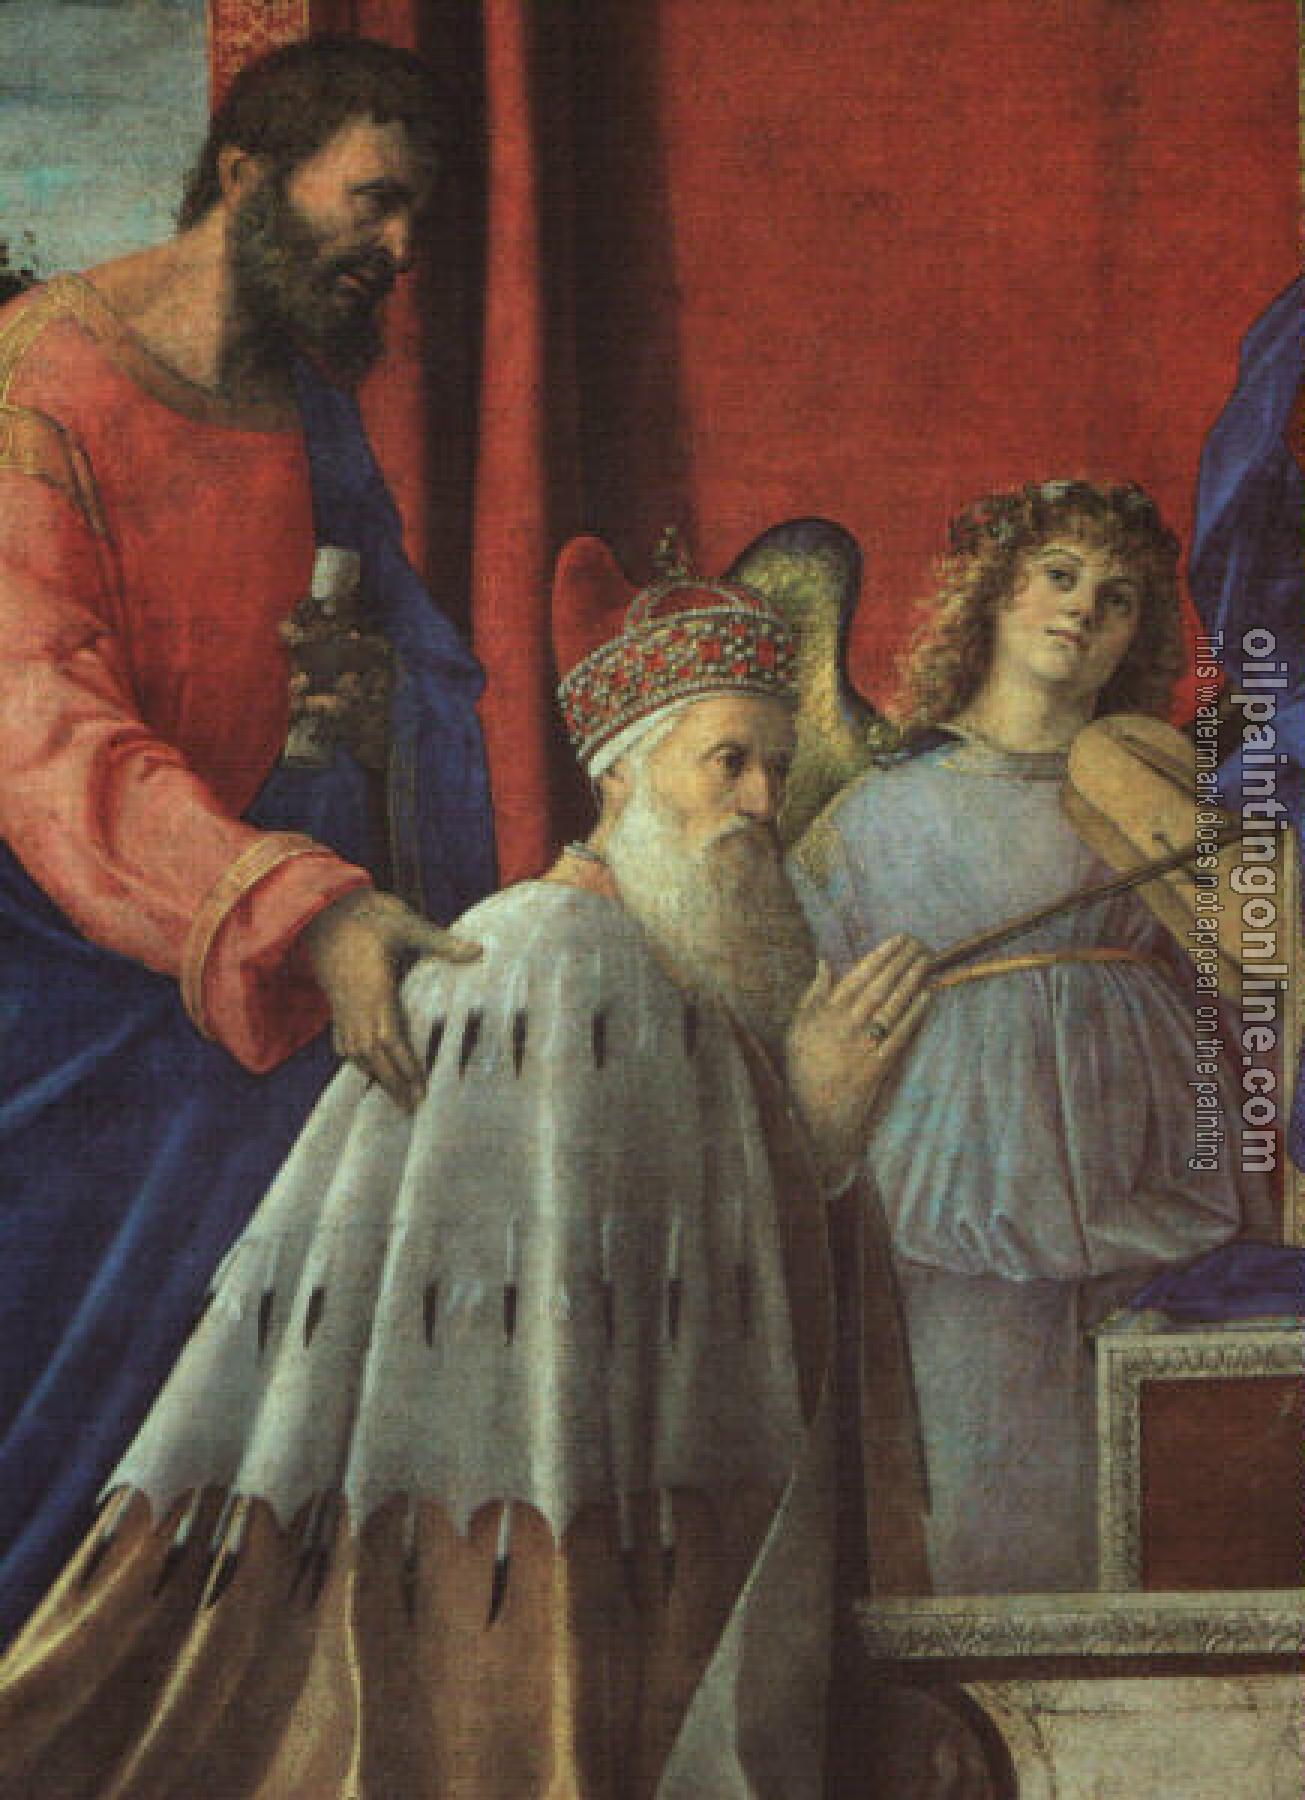 Bellini, Giovanni - The Doge Barbarigo, St. John, and Musician Angels (detail)